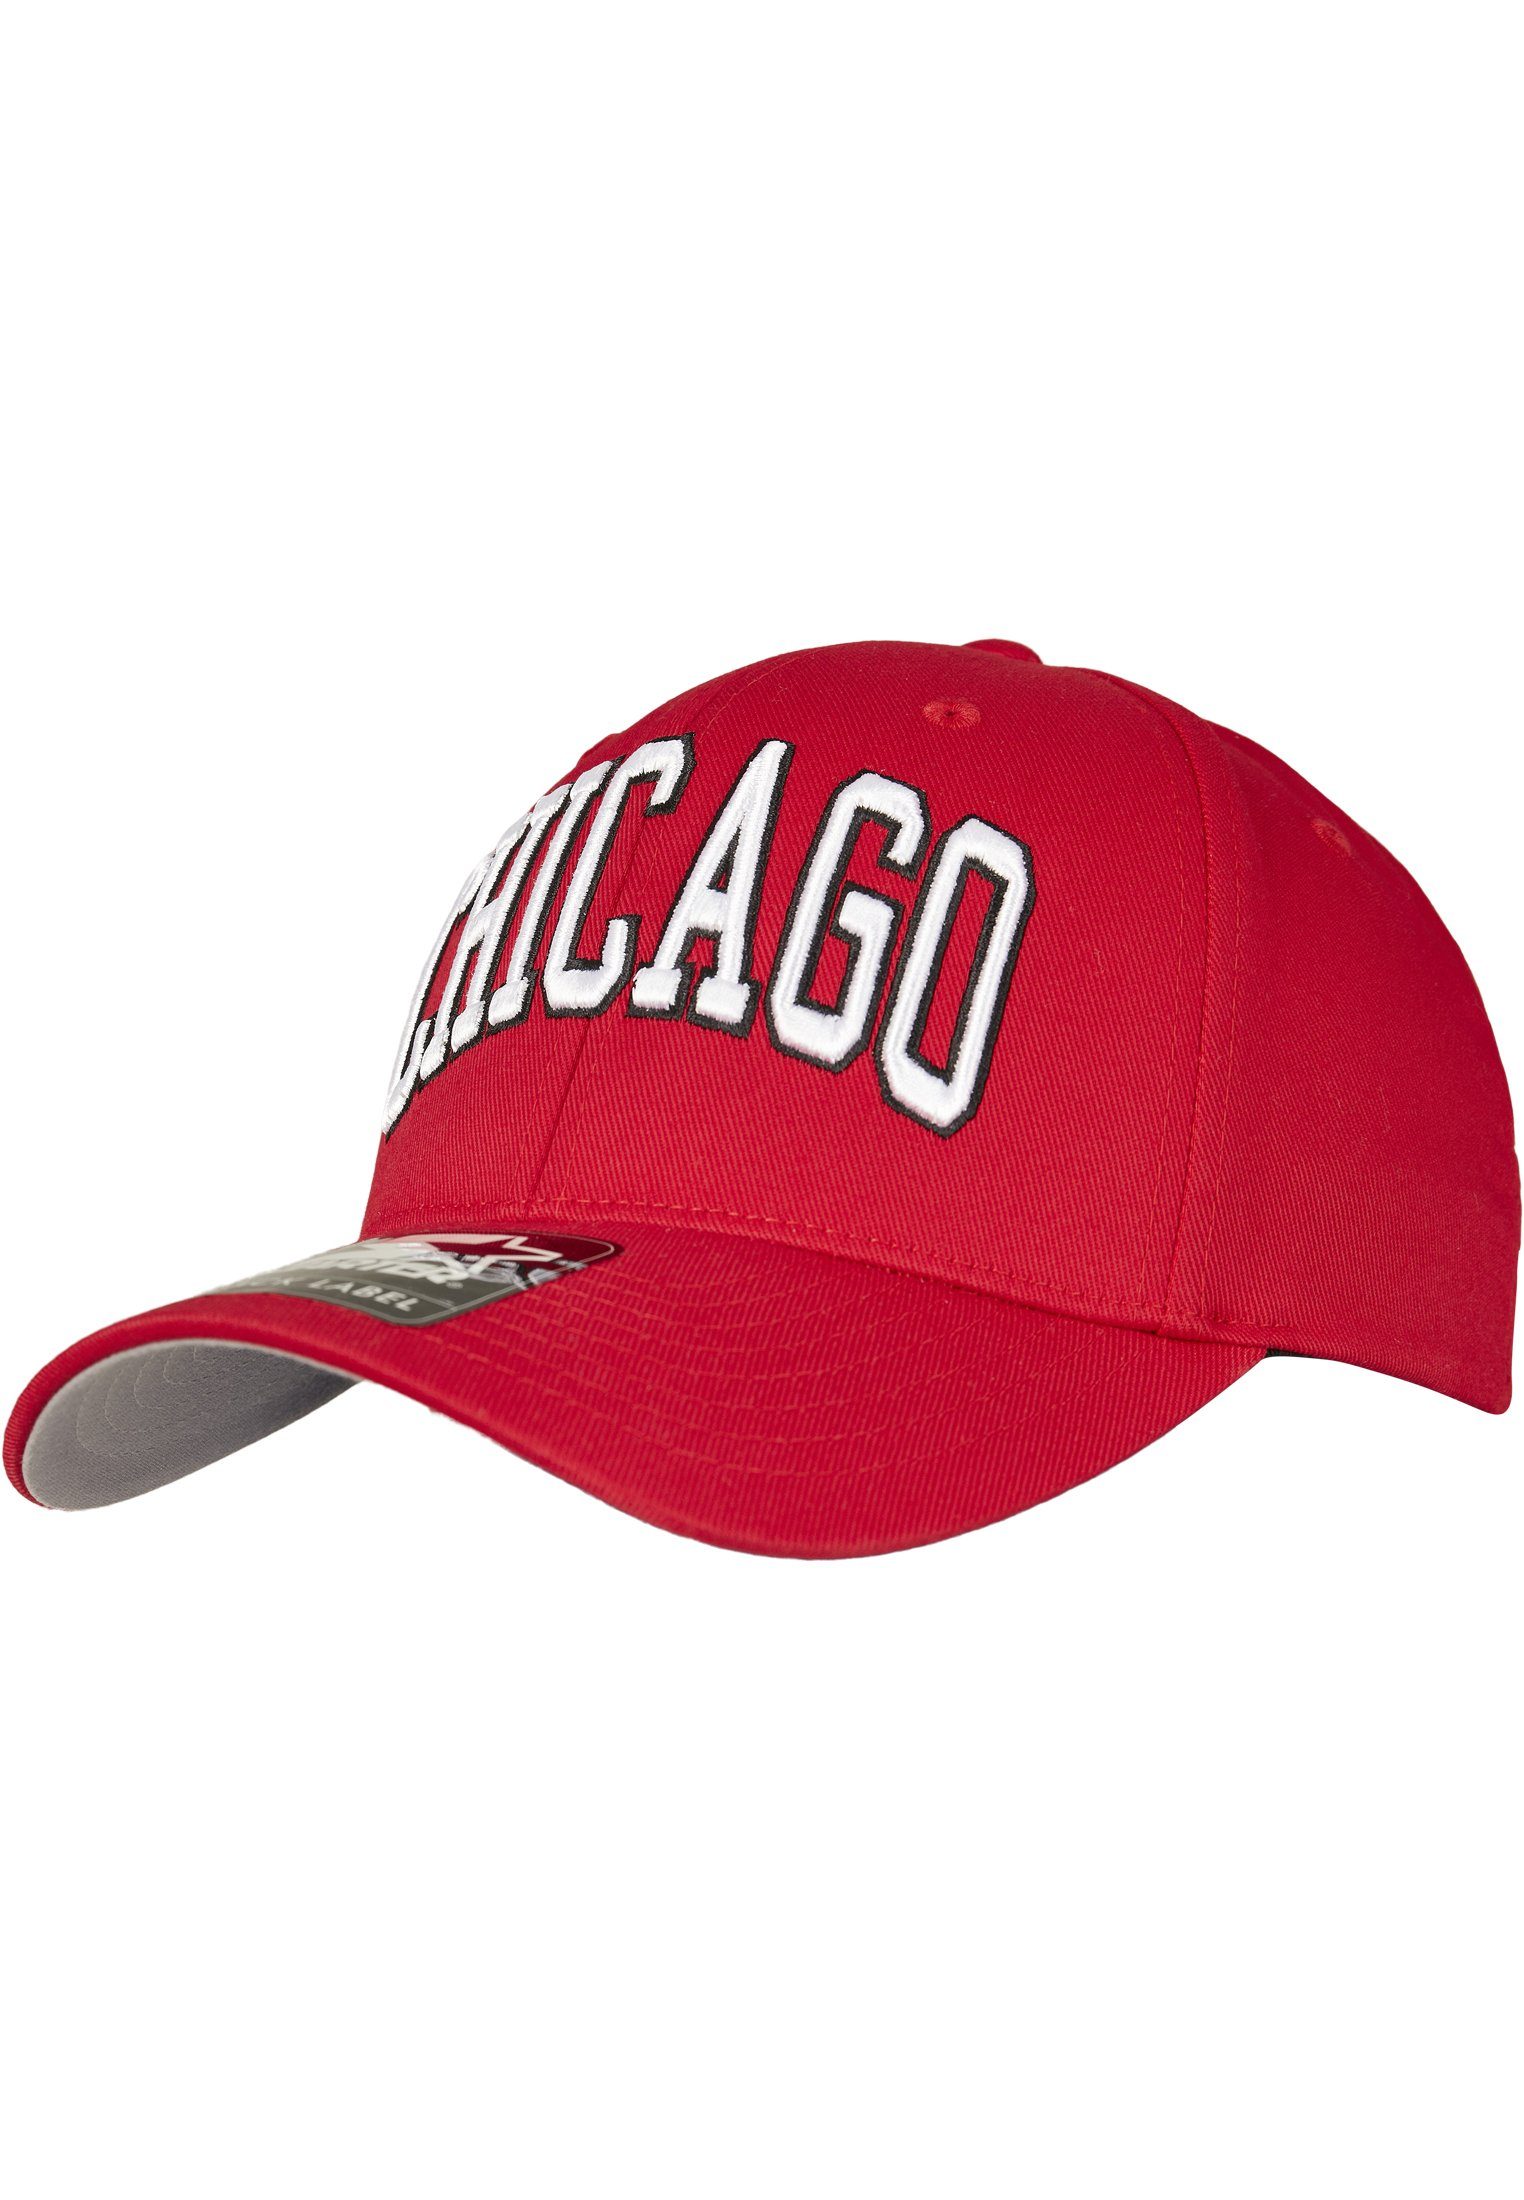 Starter Black Label Flex Cap Cap Chicago Herren Flexfit red Starter